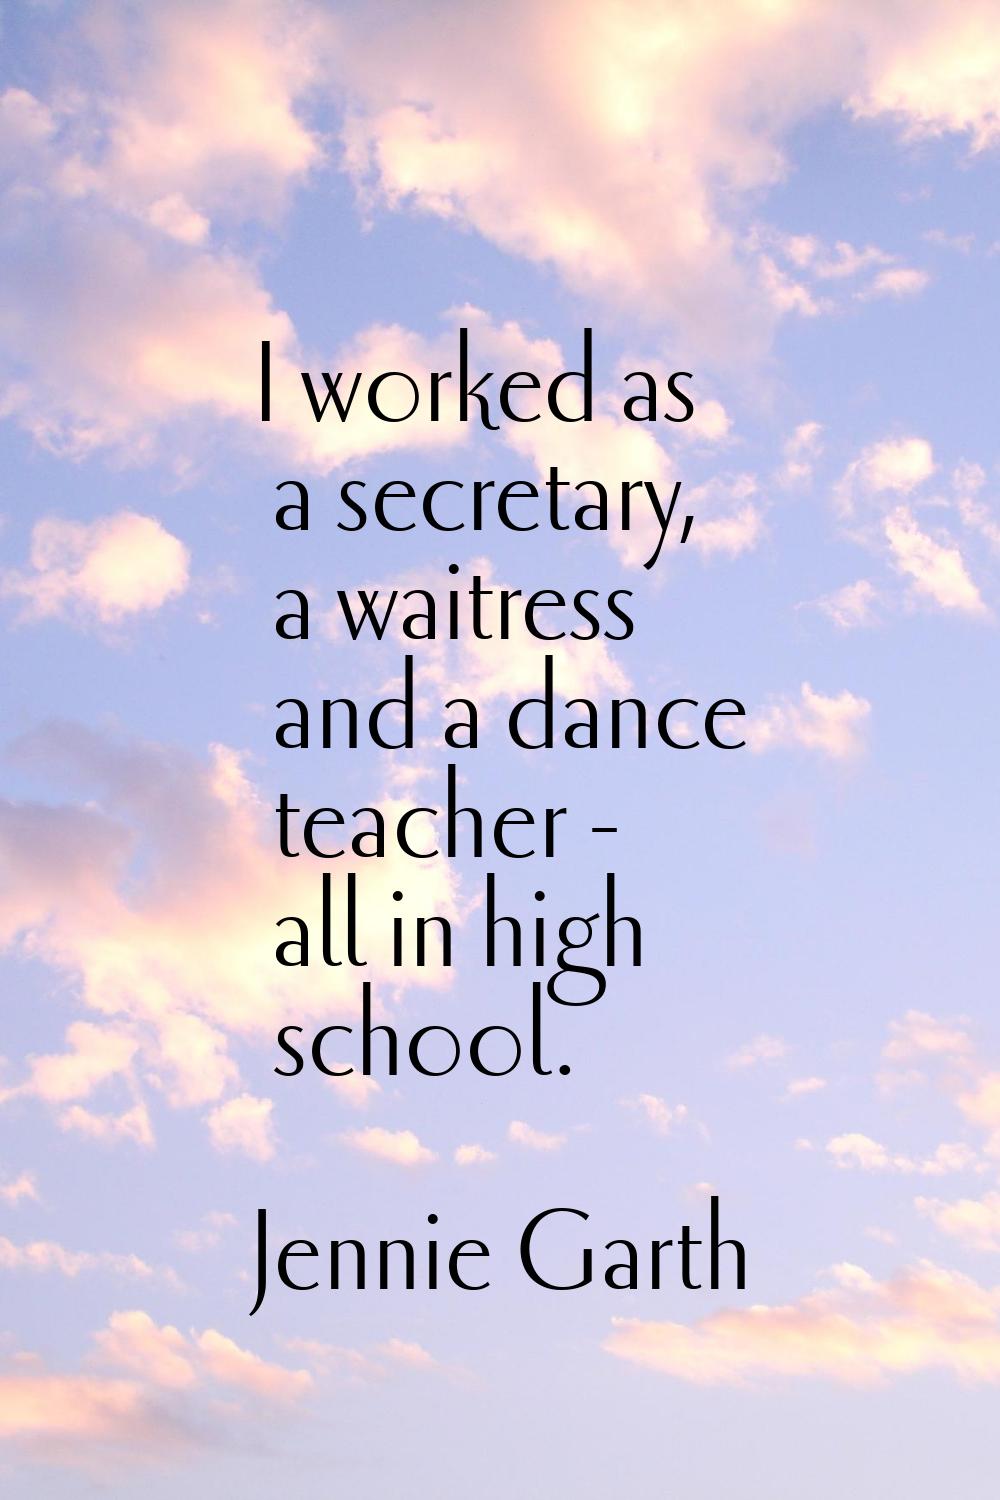 I worked as a secretary, a waitress and a dance teacher - all in high school.